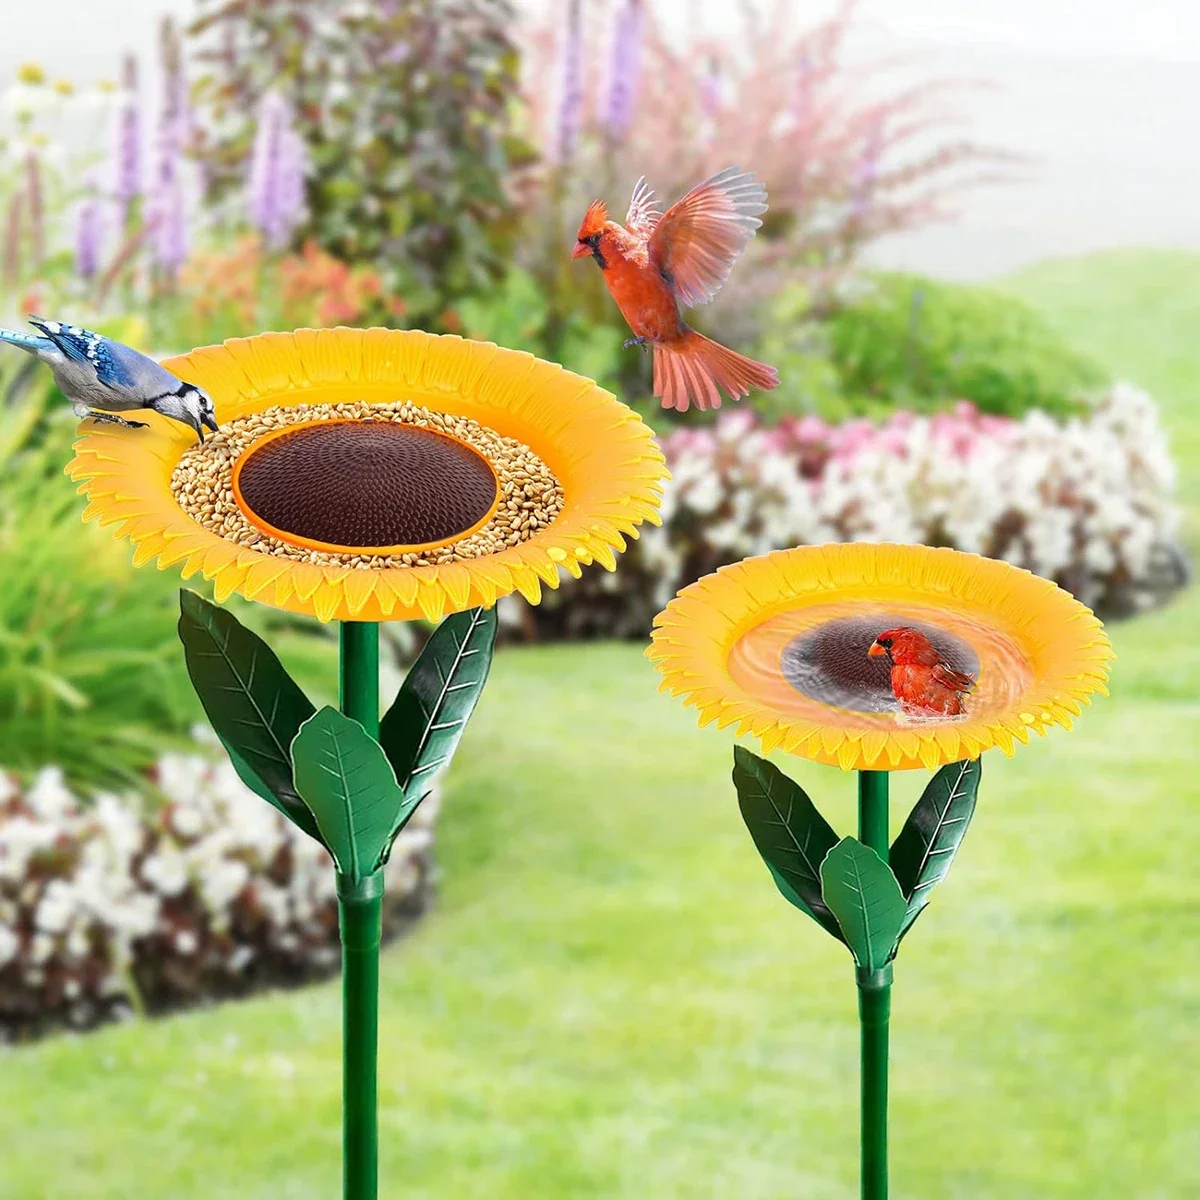 

Sunflower Bird Feeder and Bath Set - Outdoor Garden Decor Stake, Flower-Shaped Feeding Tray, Perfect for Wild Bird Watching